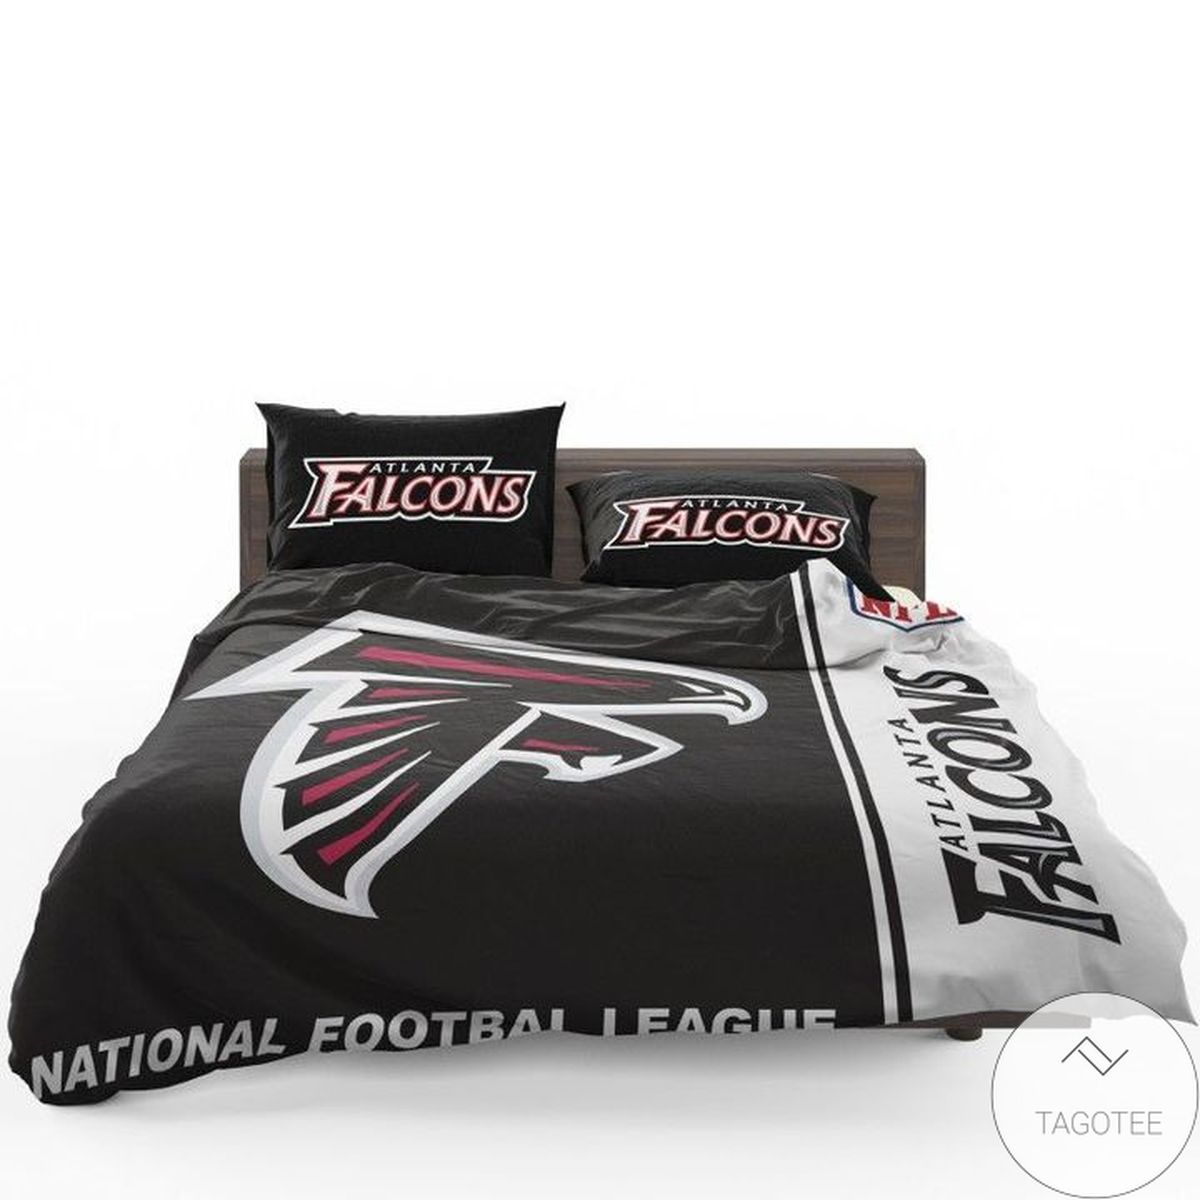 Atlanta Falcons National Football League Bedding Set